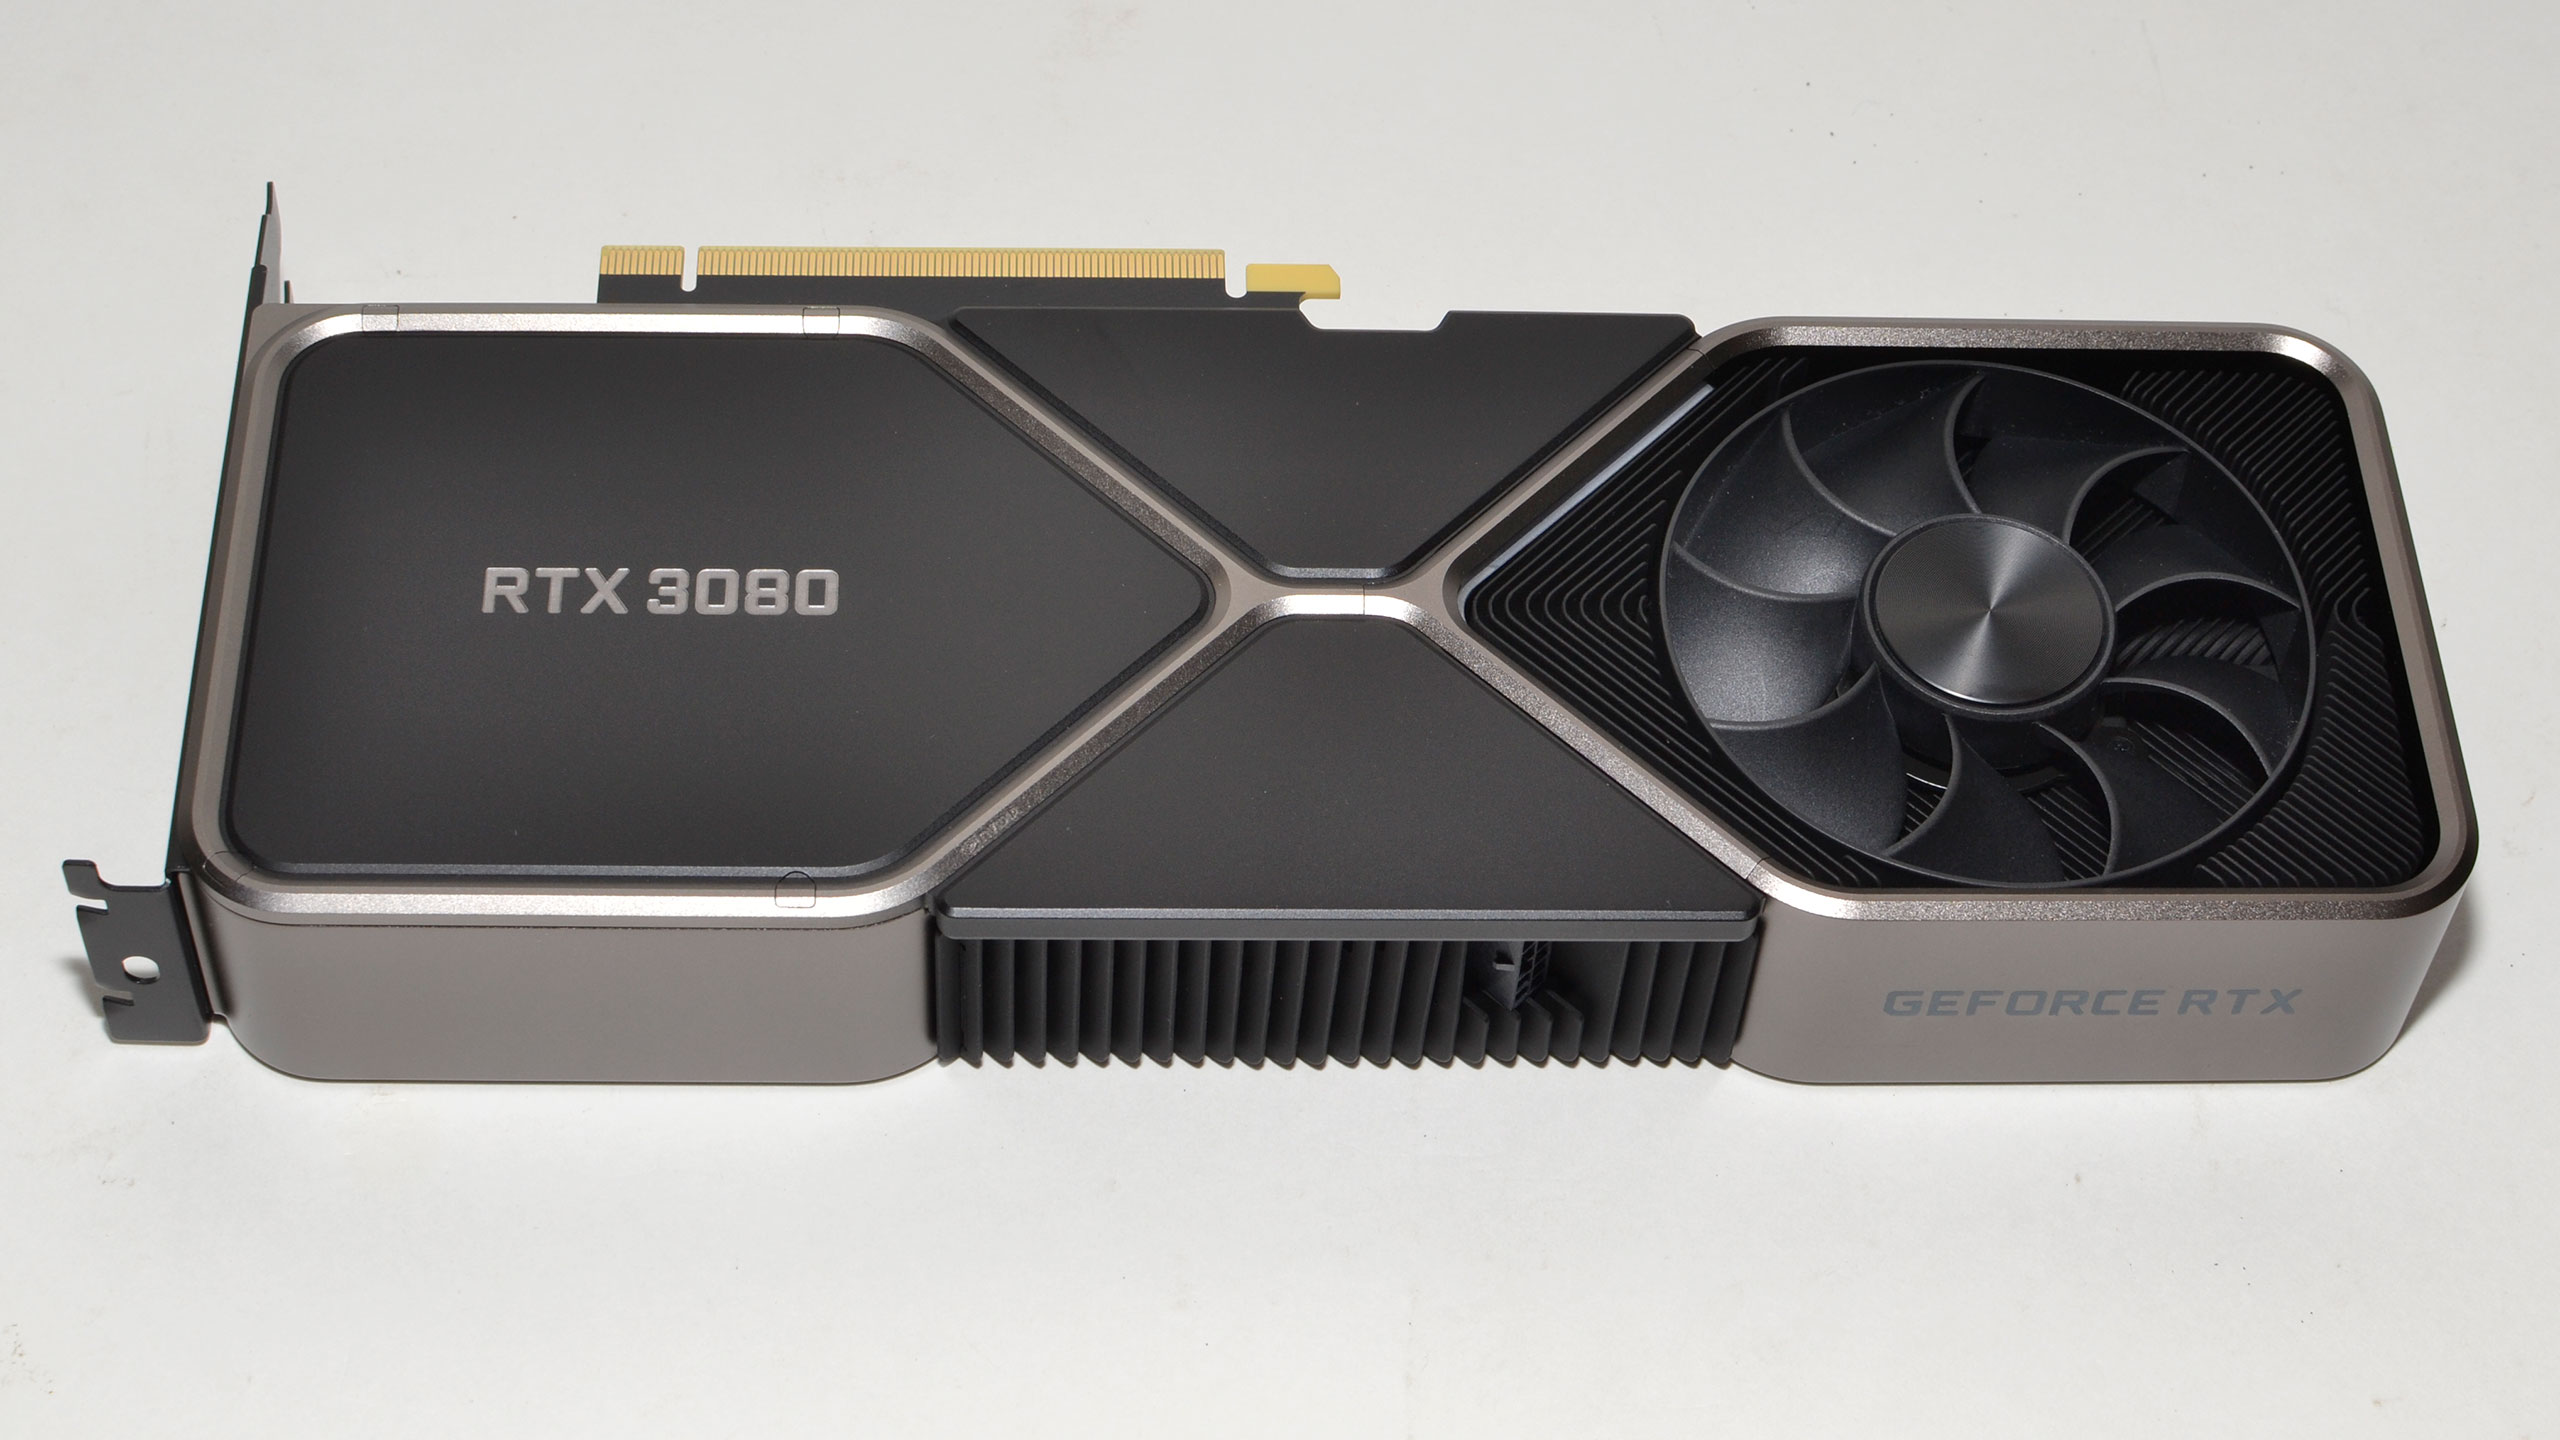 GeForce RTX 3080: 1080p Gaming Benchmarks - Nvidia GeForce RTX 